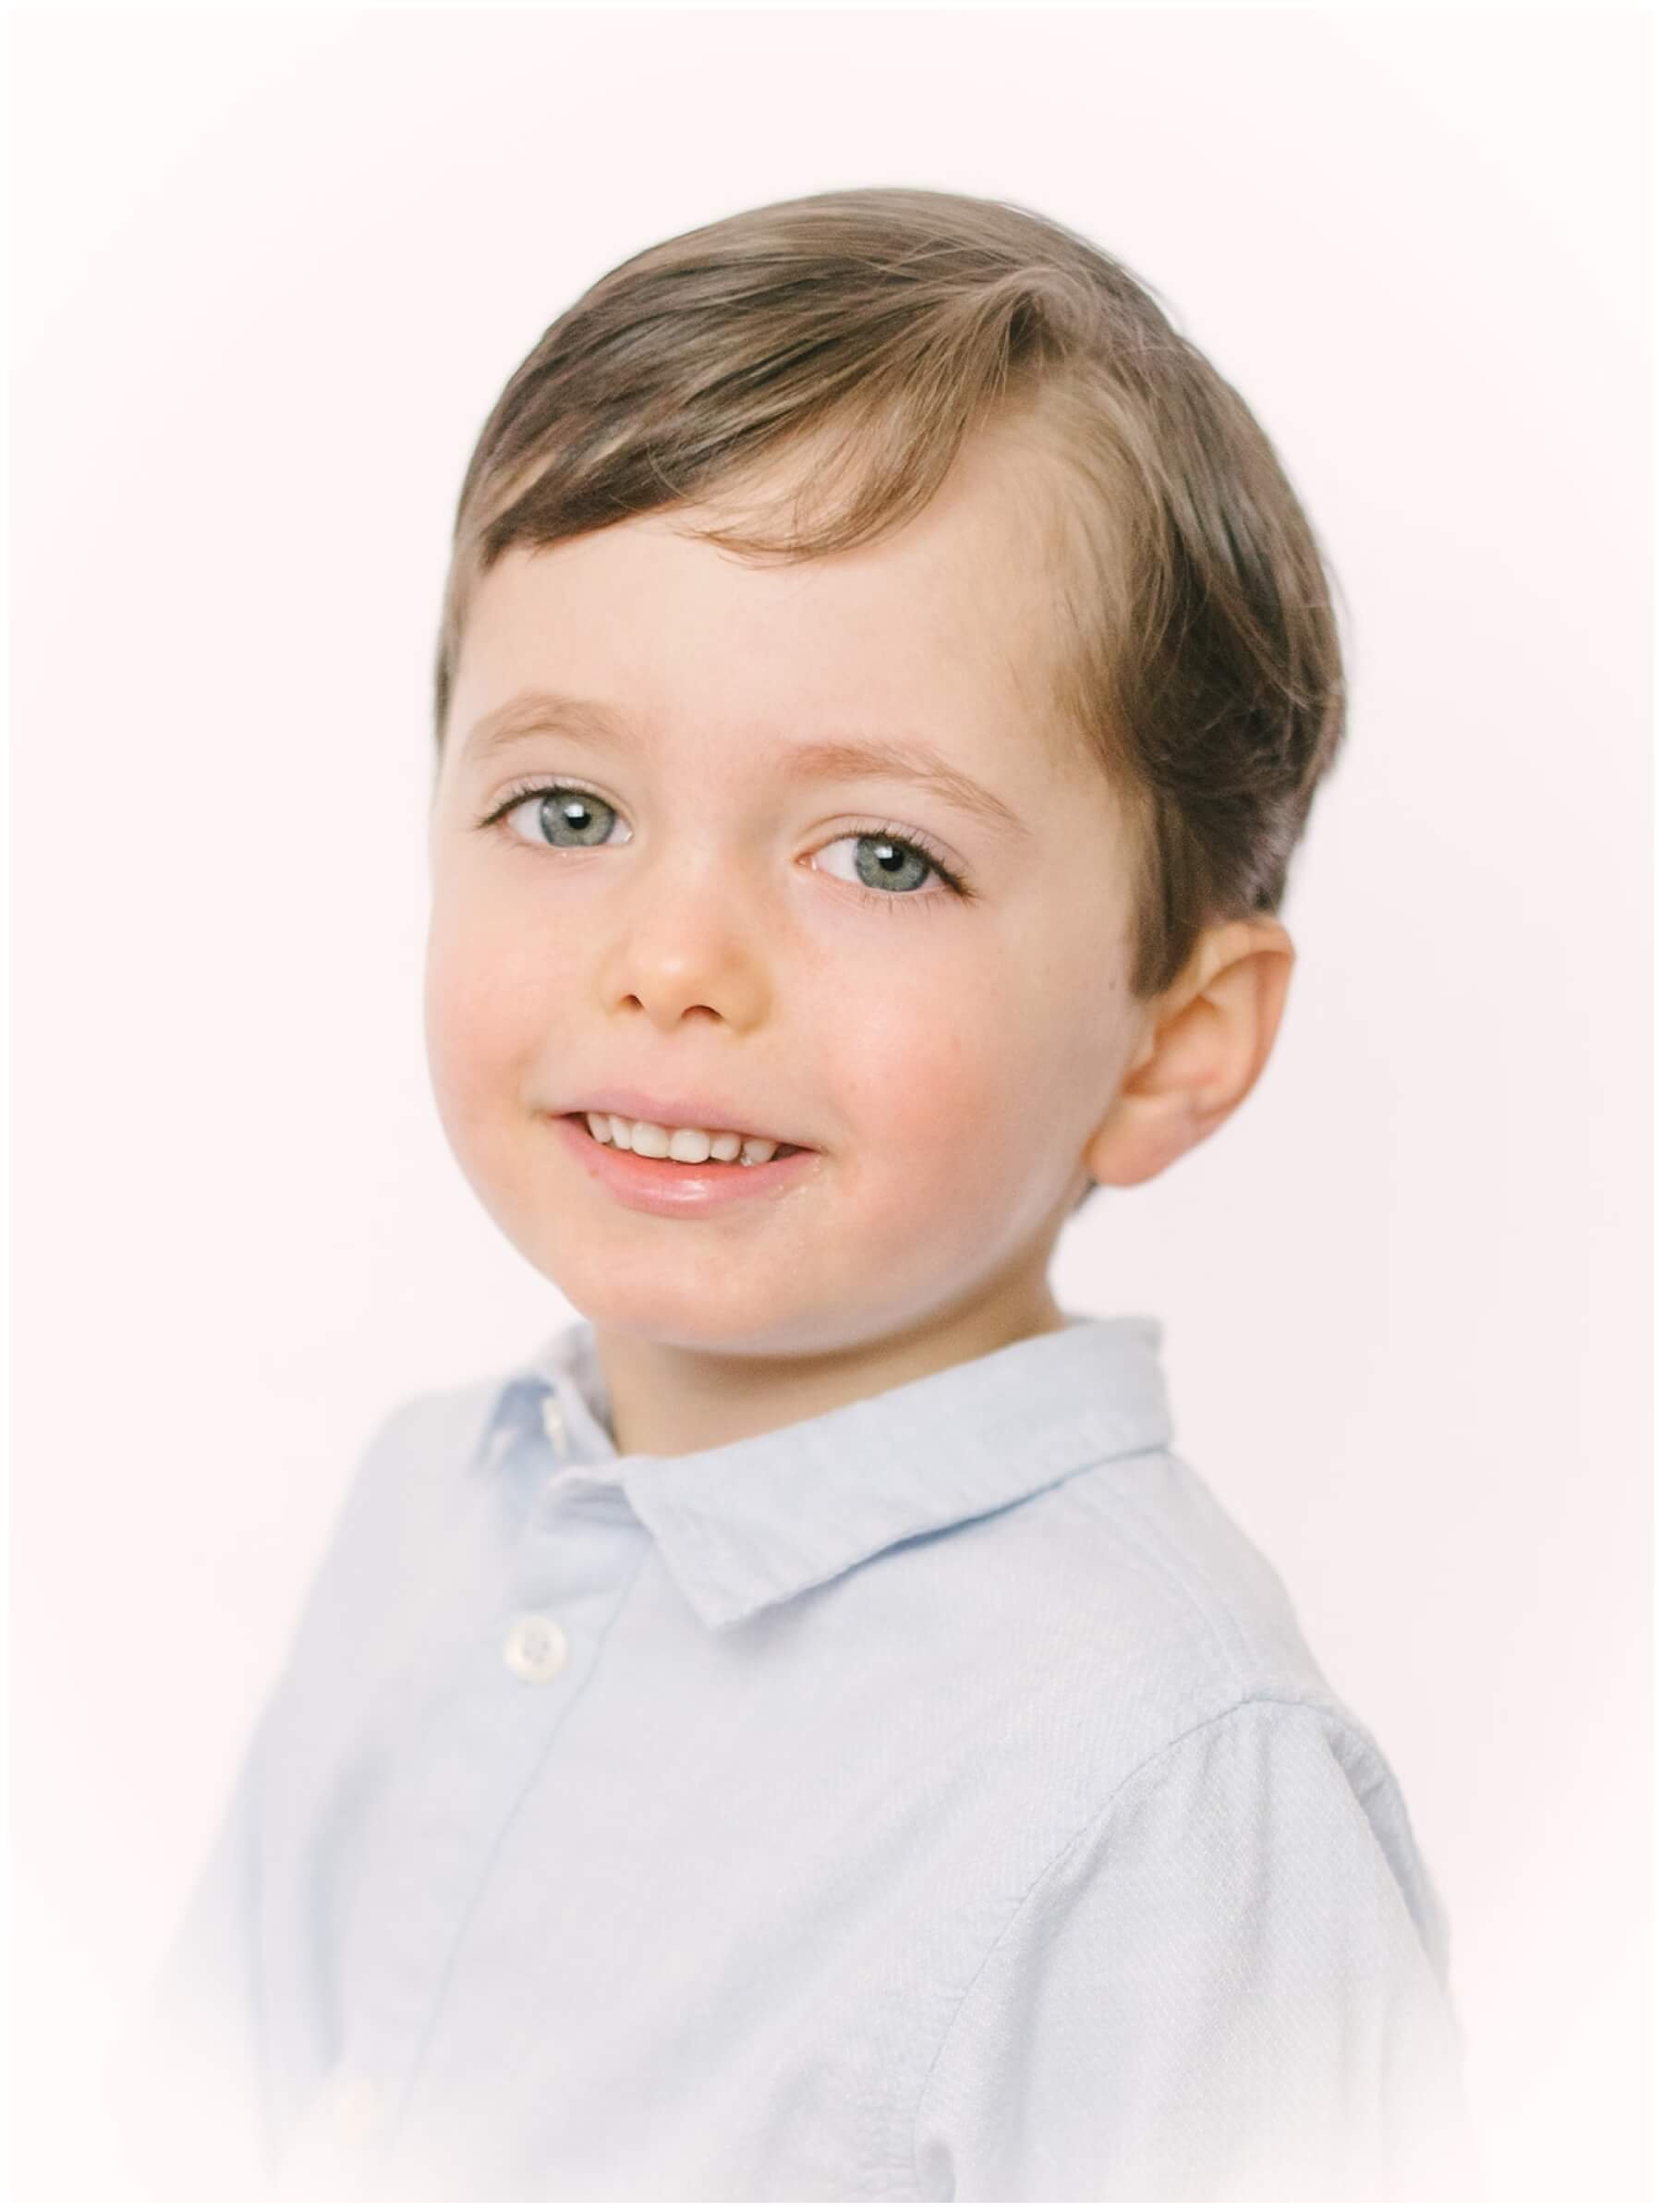 Heirloom portrait of toddler boy in blue shirt | NKB Photo